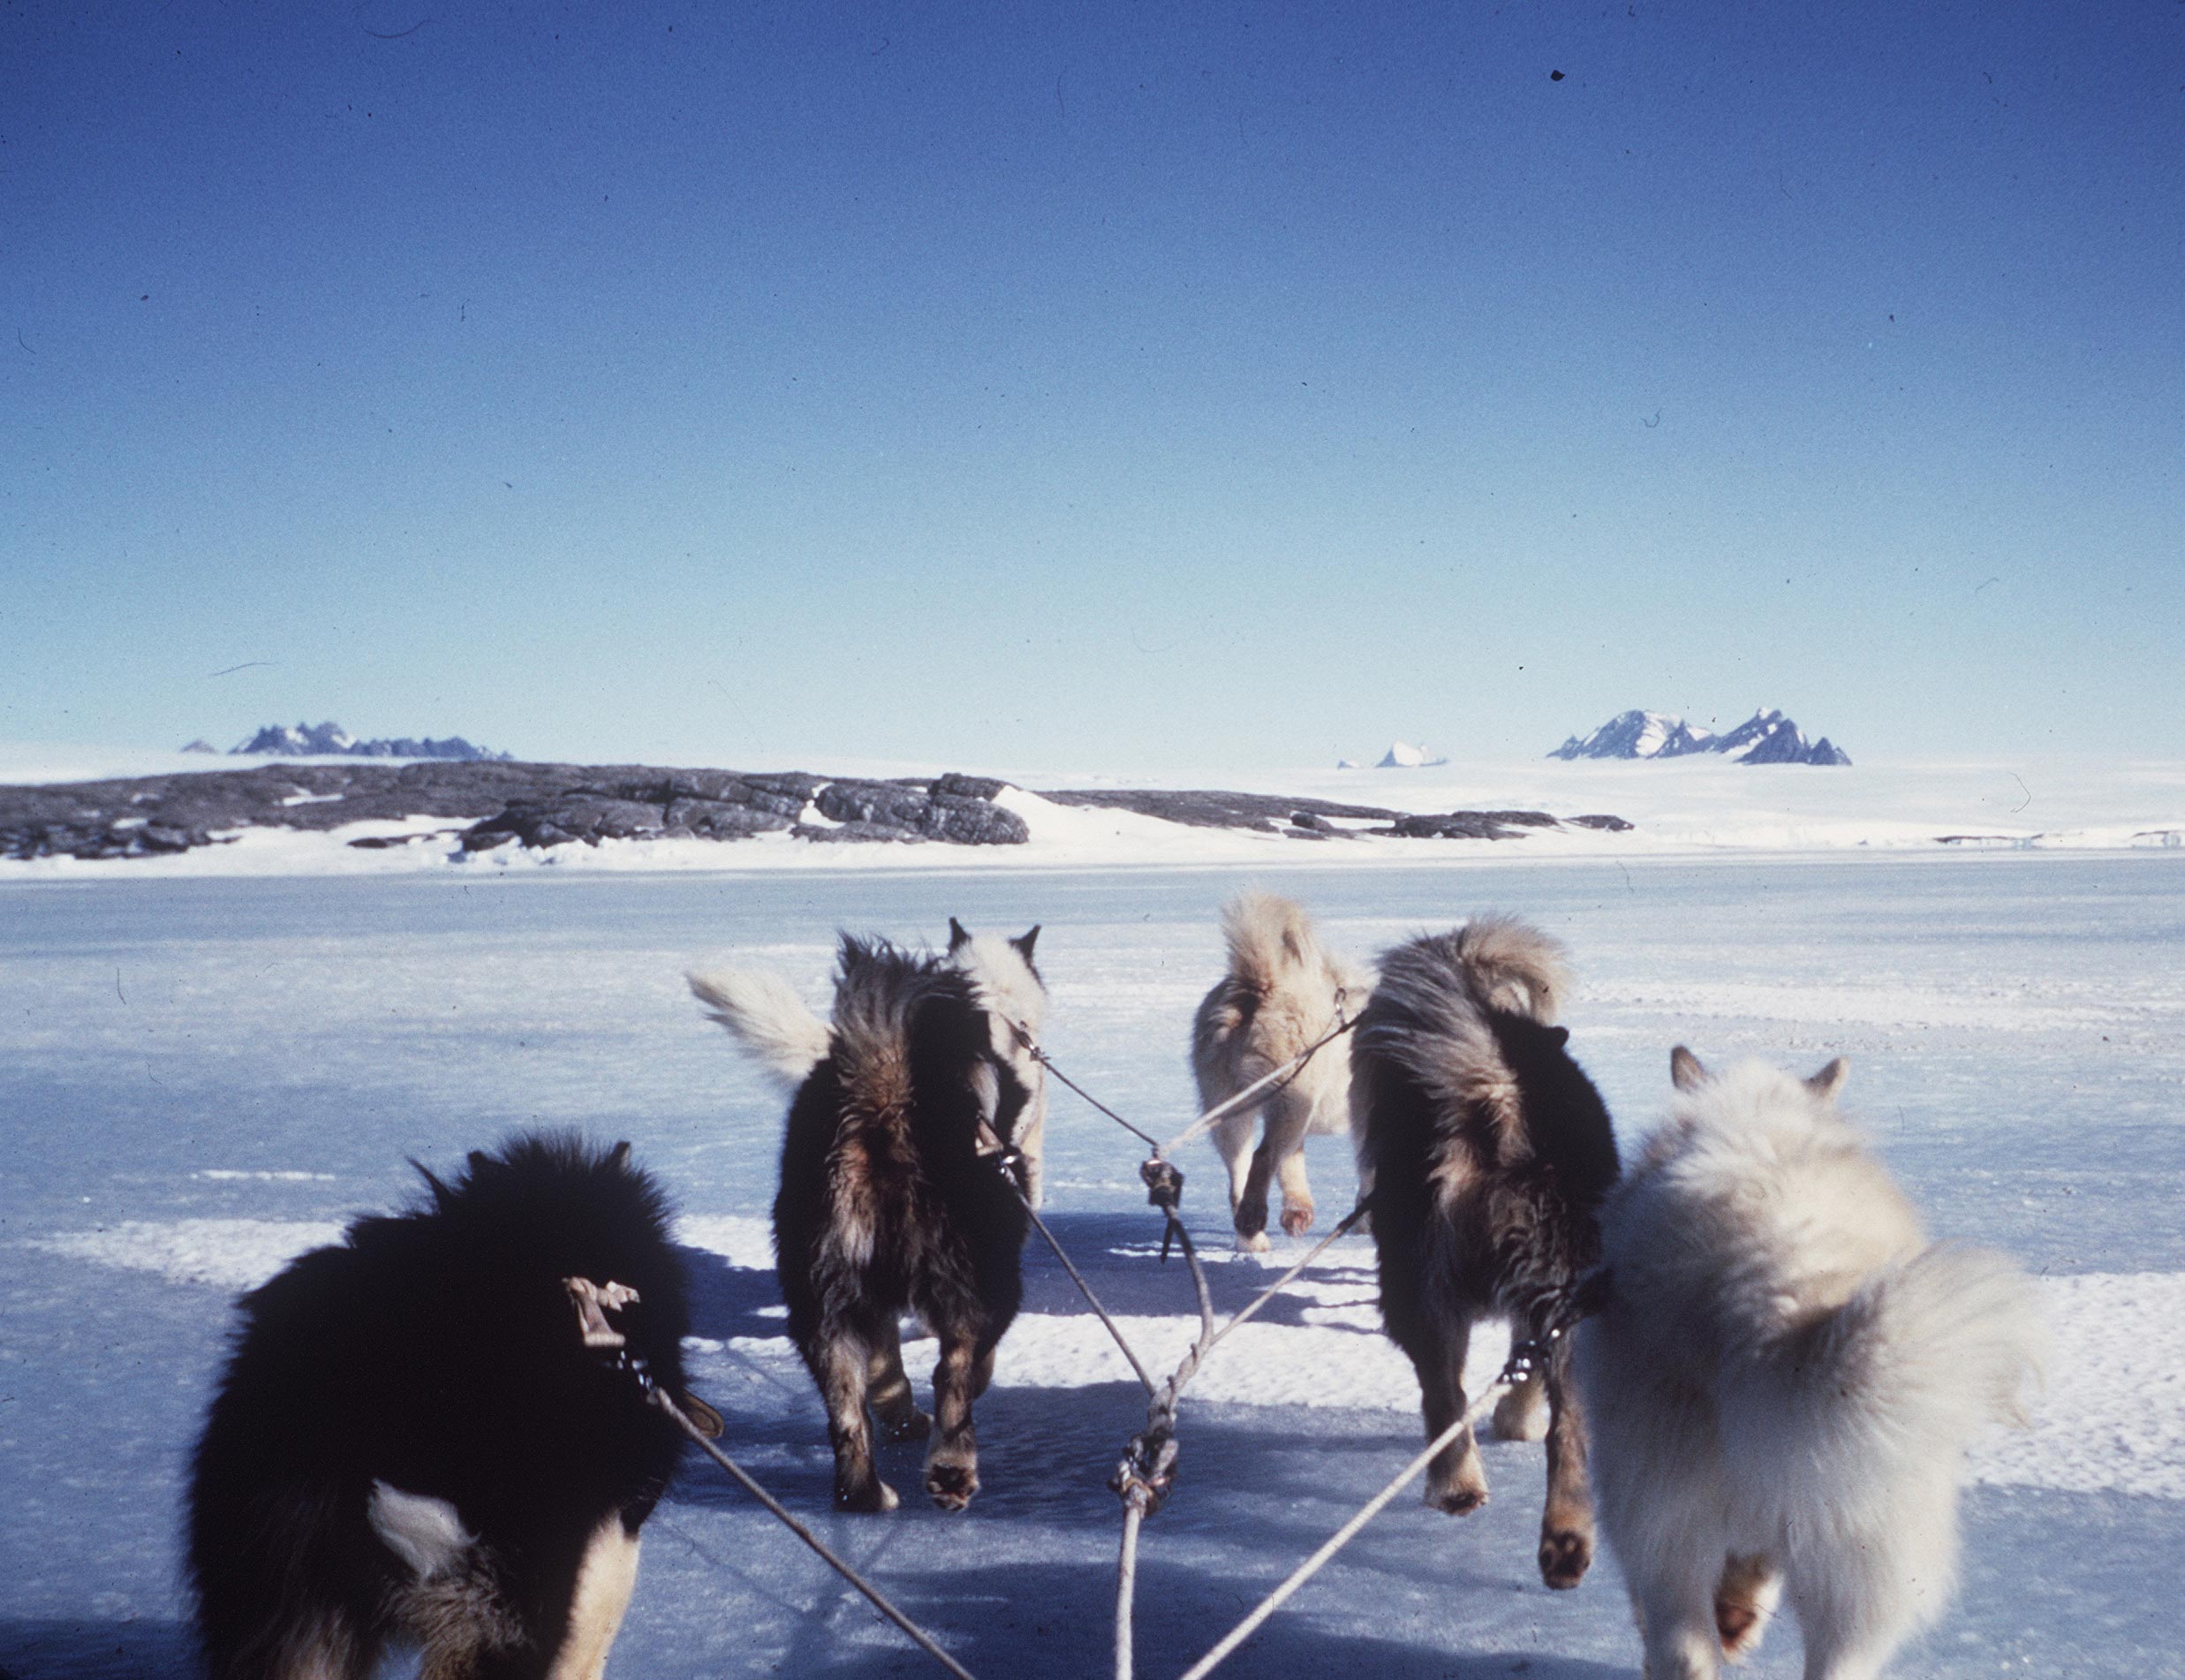 Huskies approaching Mawson station on the sea ice.